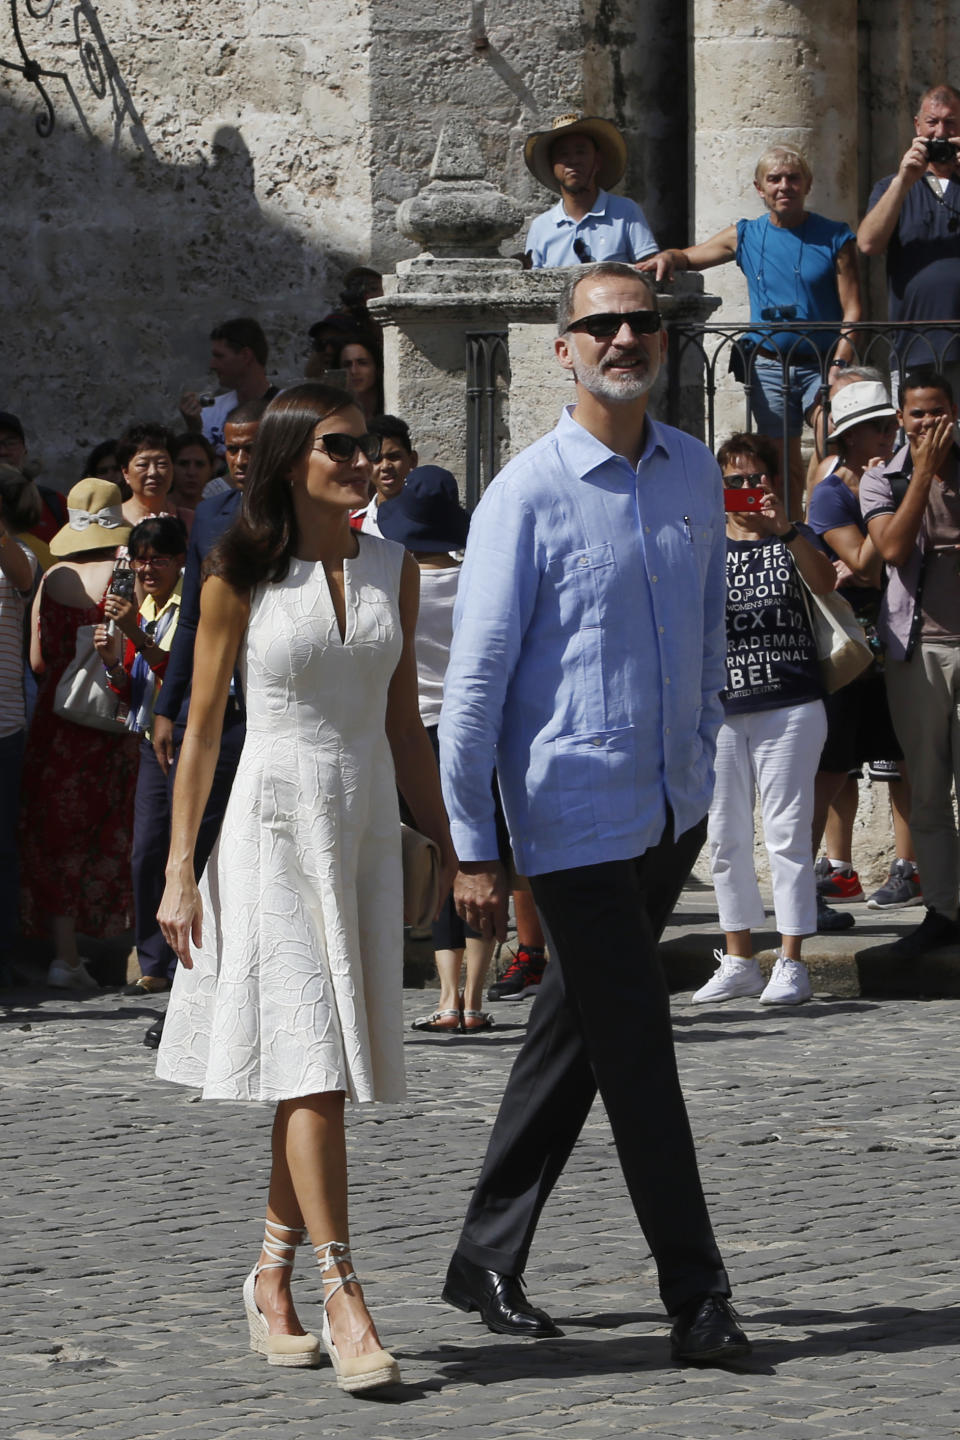 Spain's King Felipe VI and Queen Letizia walk in Old Havana, Cuba, Tuesday, Nov. 12, 2019. (Jorge Luis Baños/Pool Photo via AP)